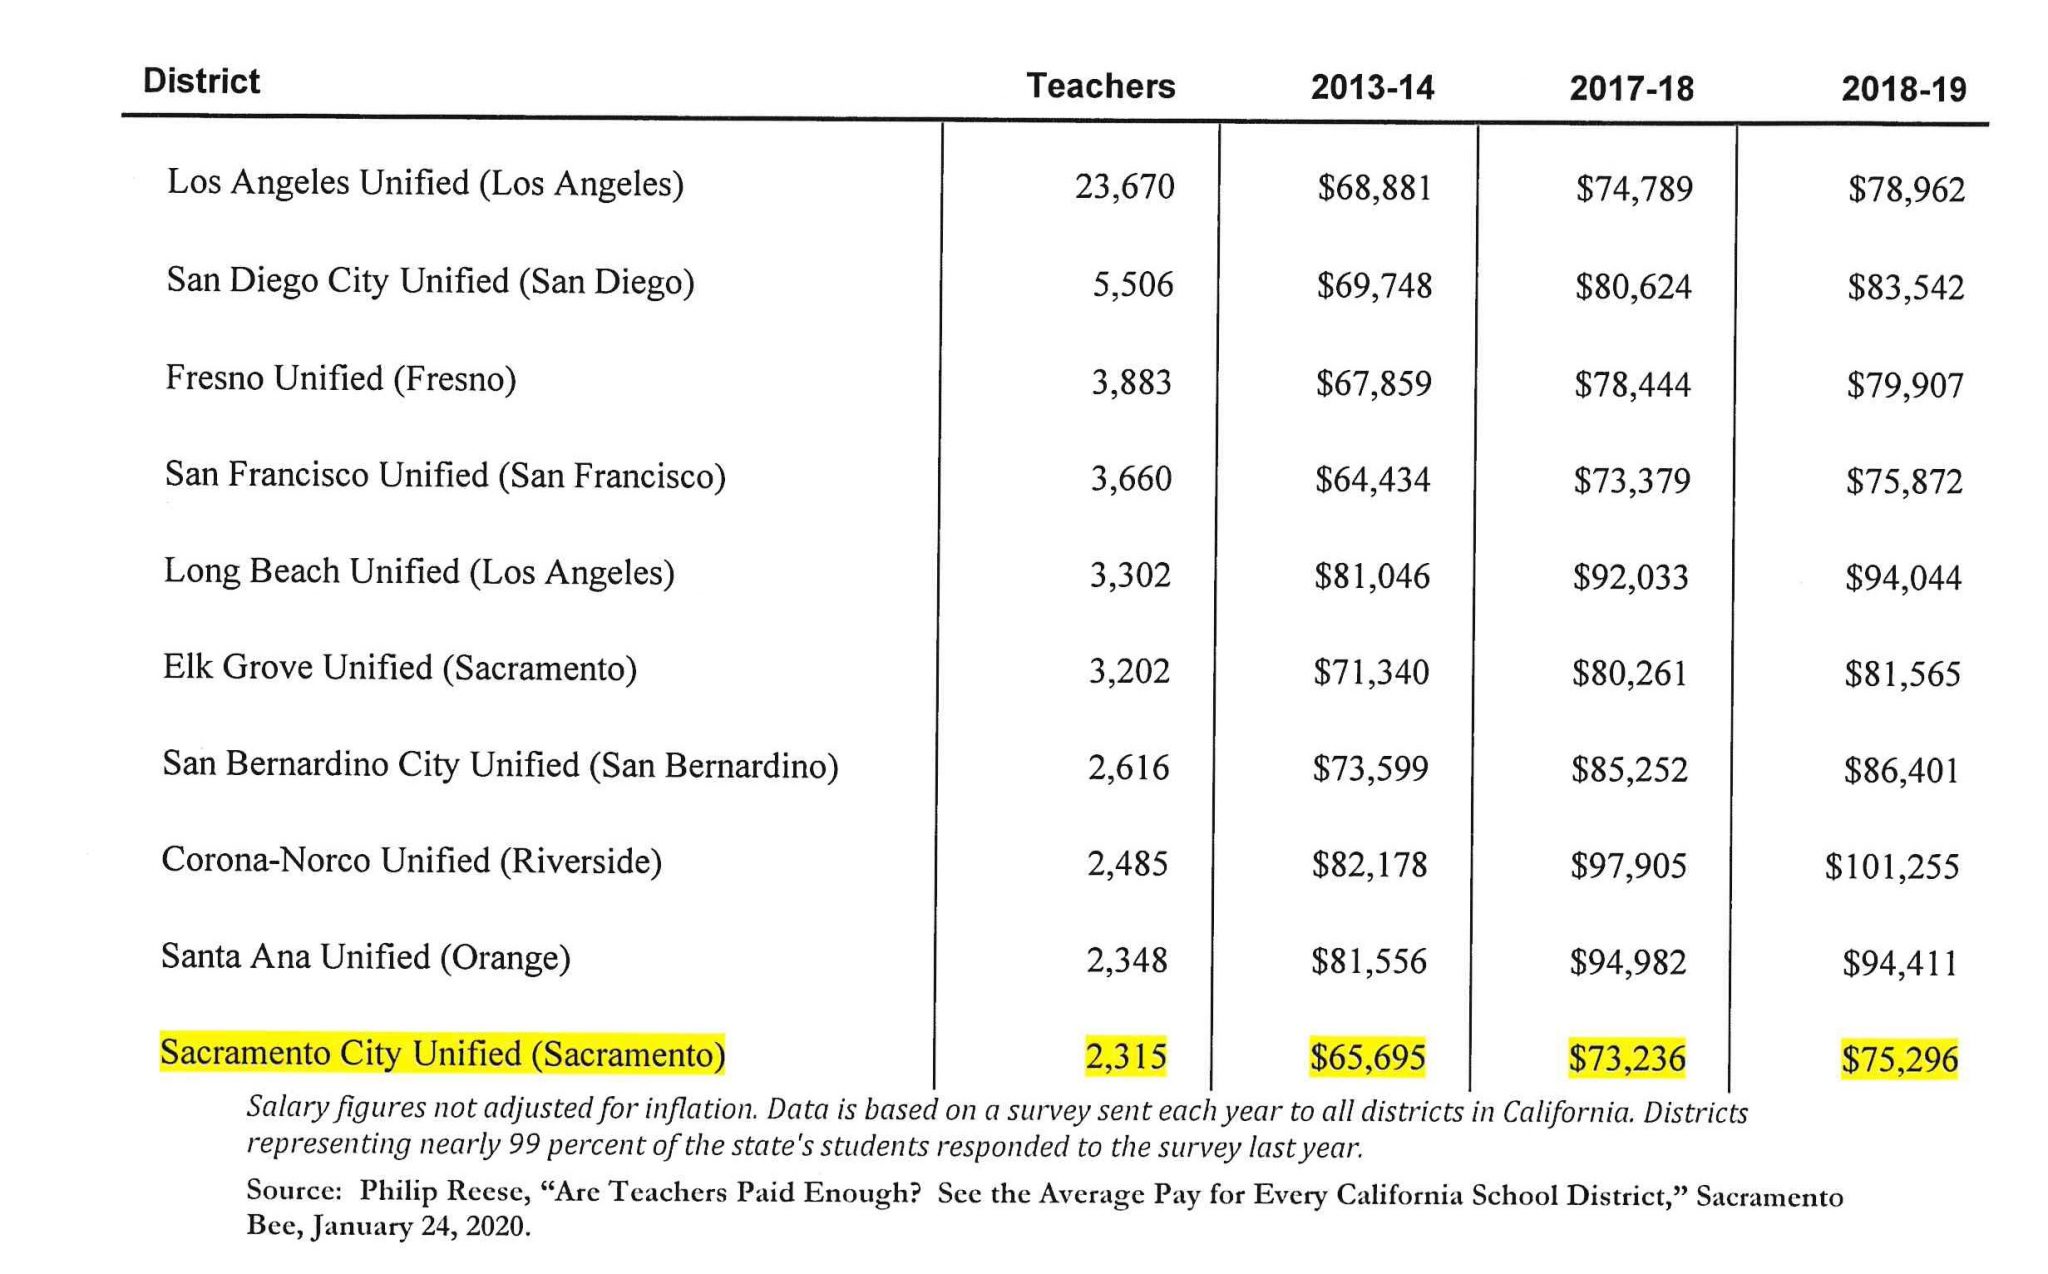 SCUSD Teacher Salaries Lag Behind State and Regional Average